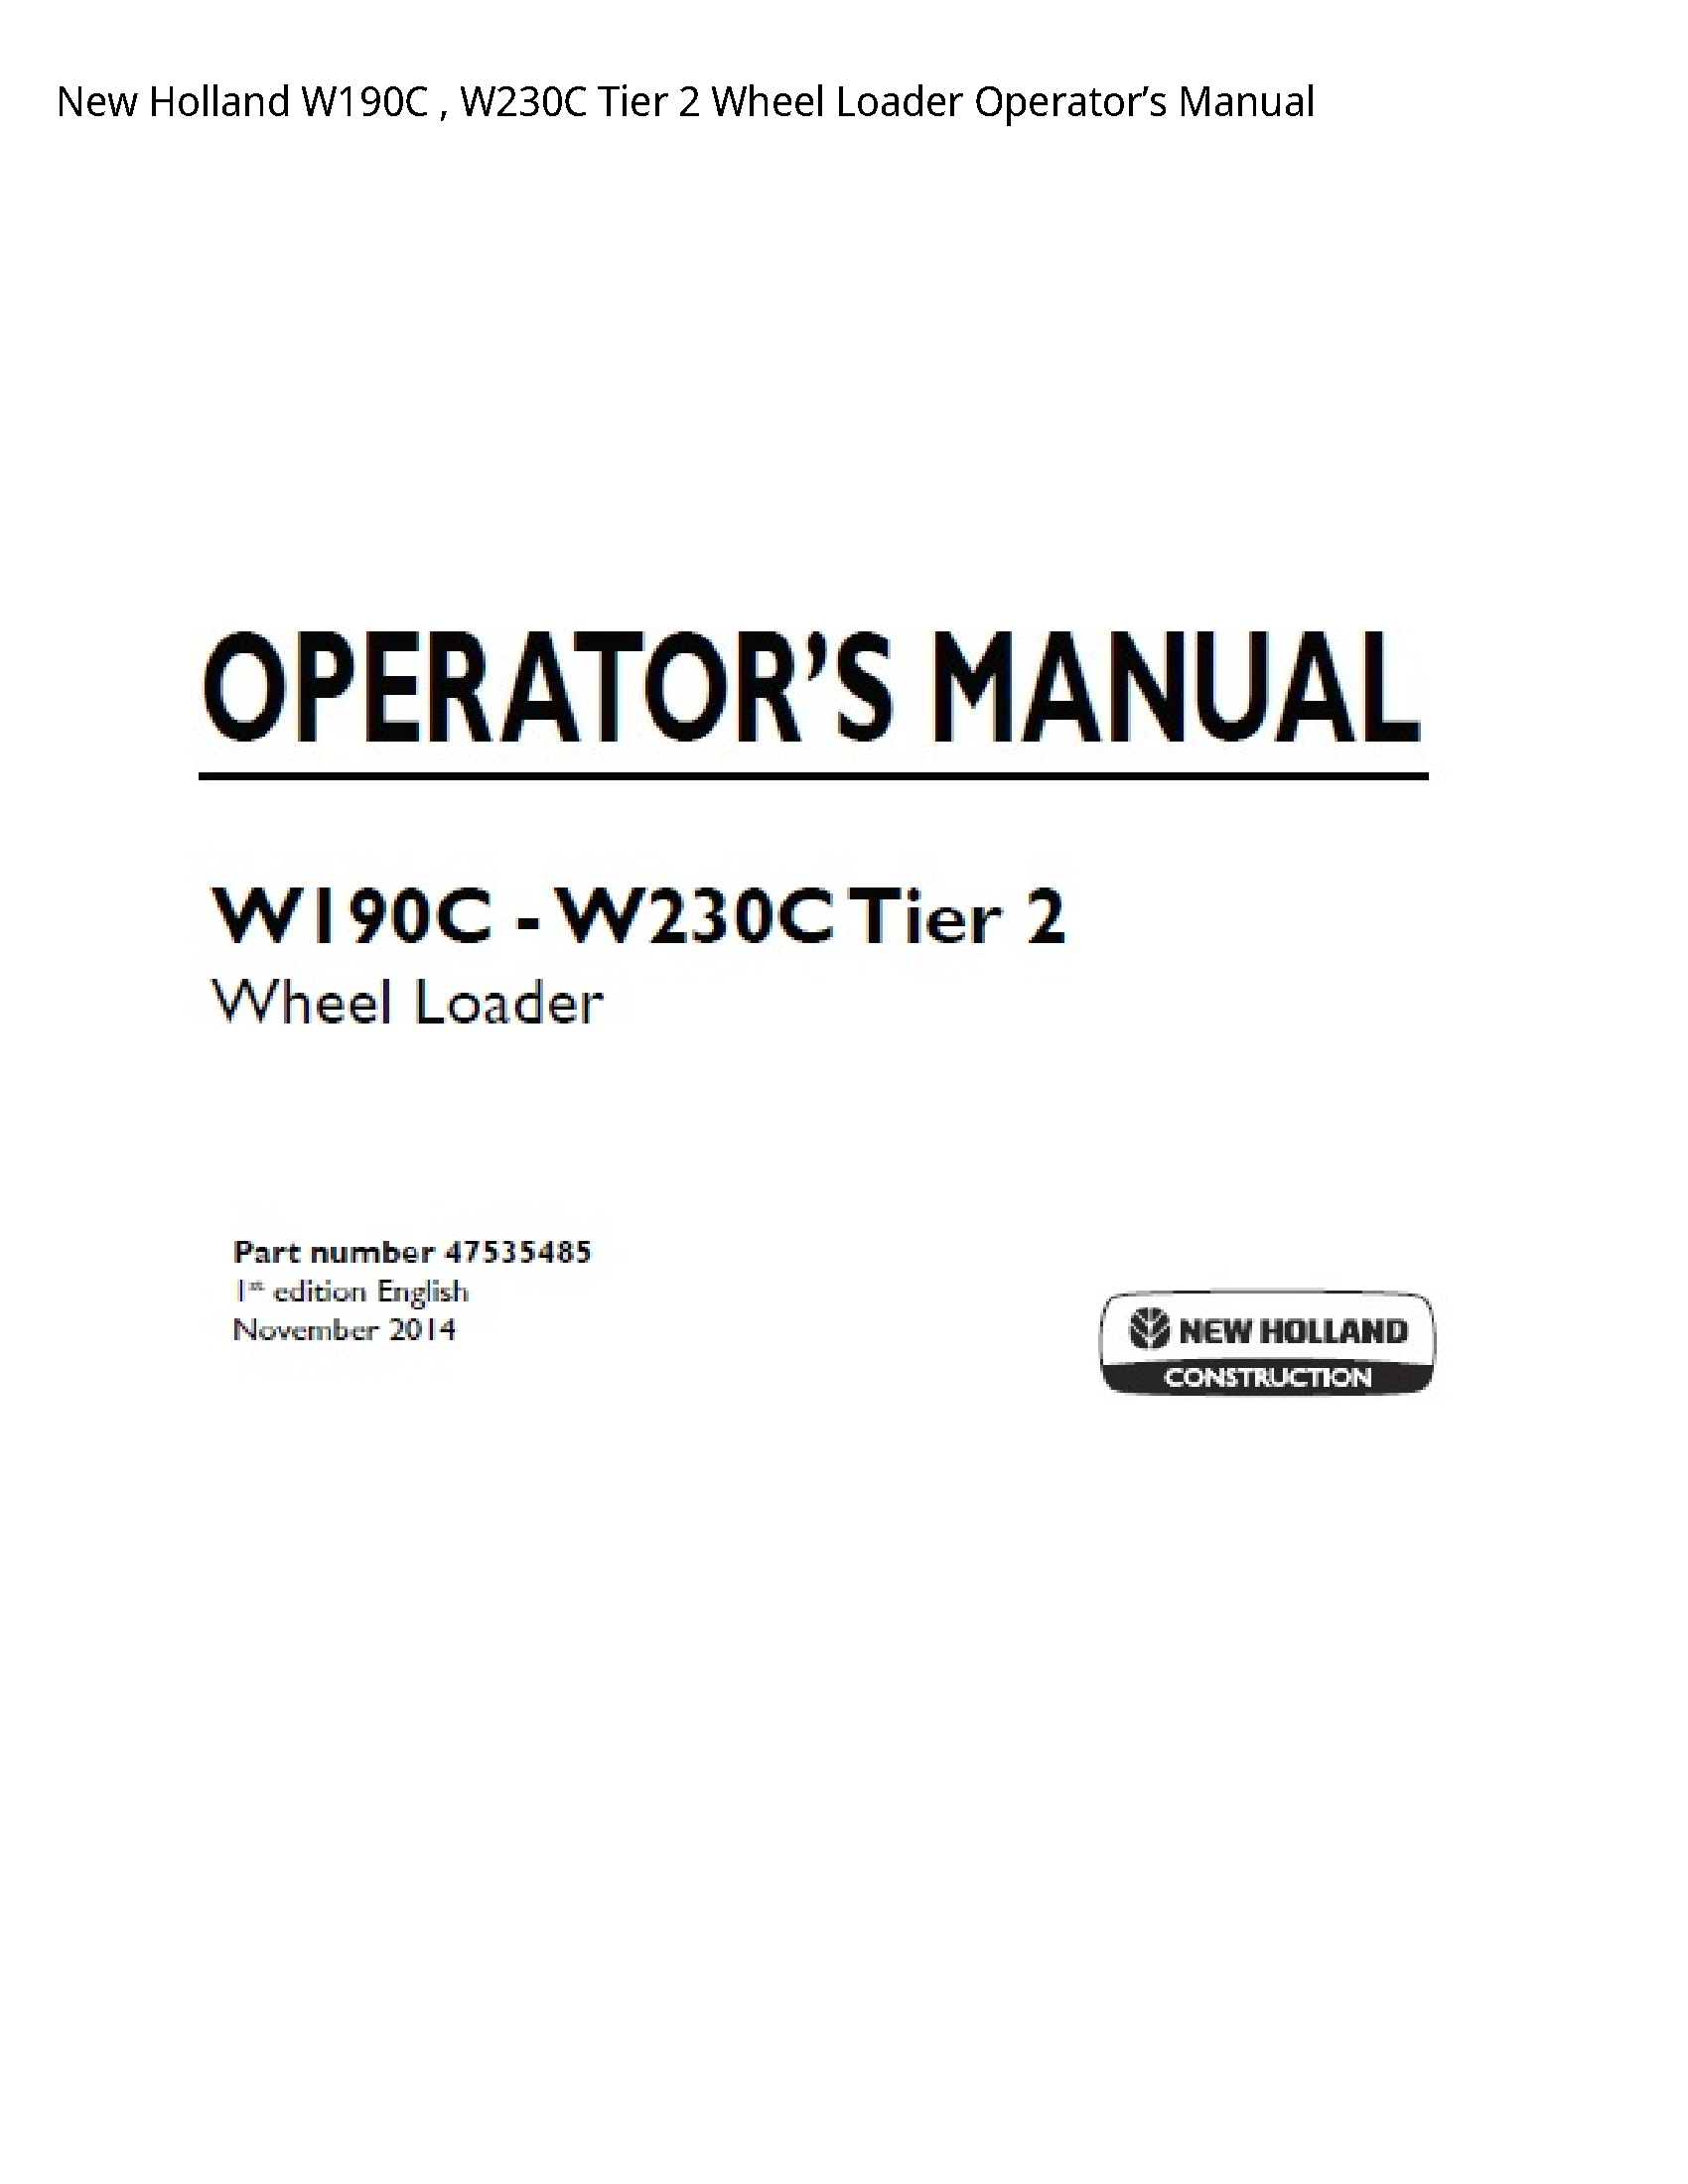 New Holland W190C Tier Wheel Loader Operator’s manual